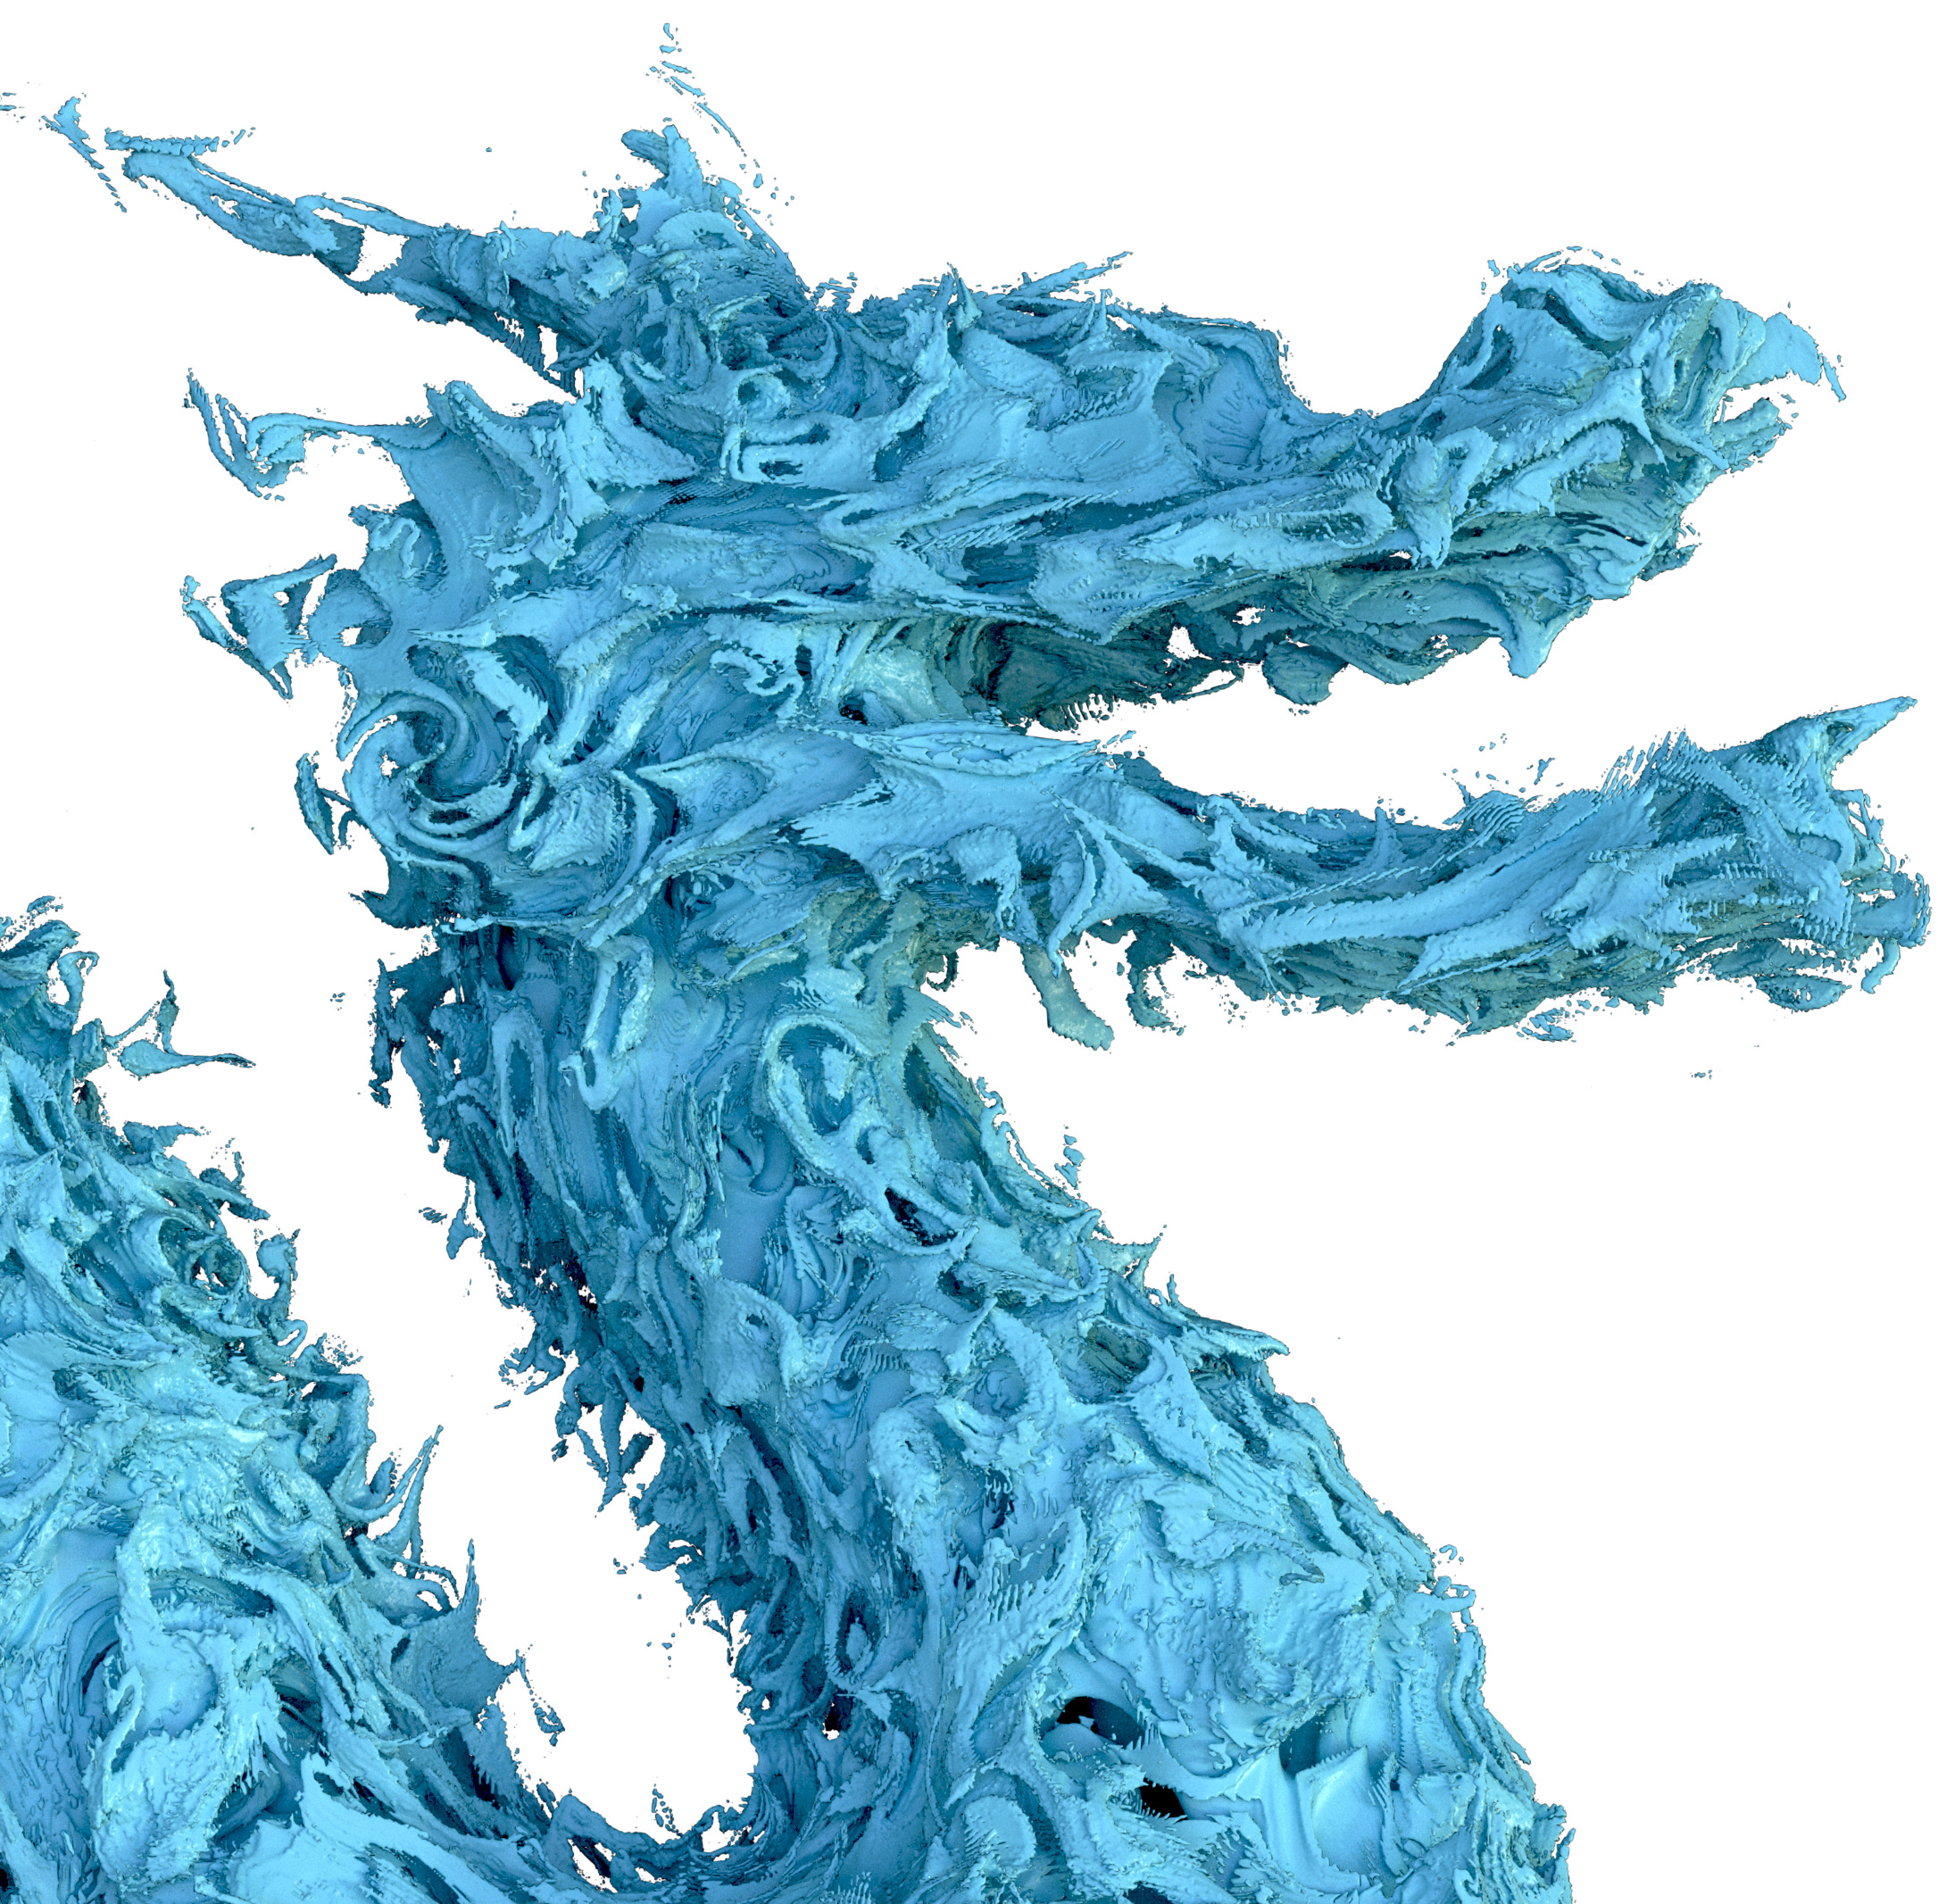 A dragon-shaped fractal Julia set